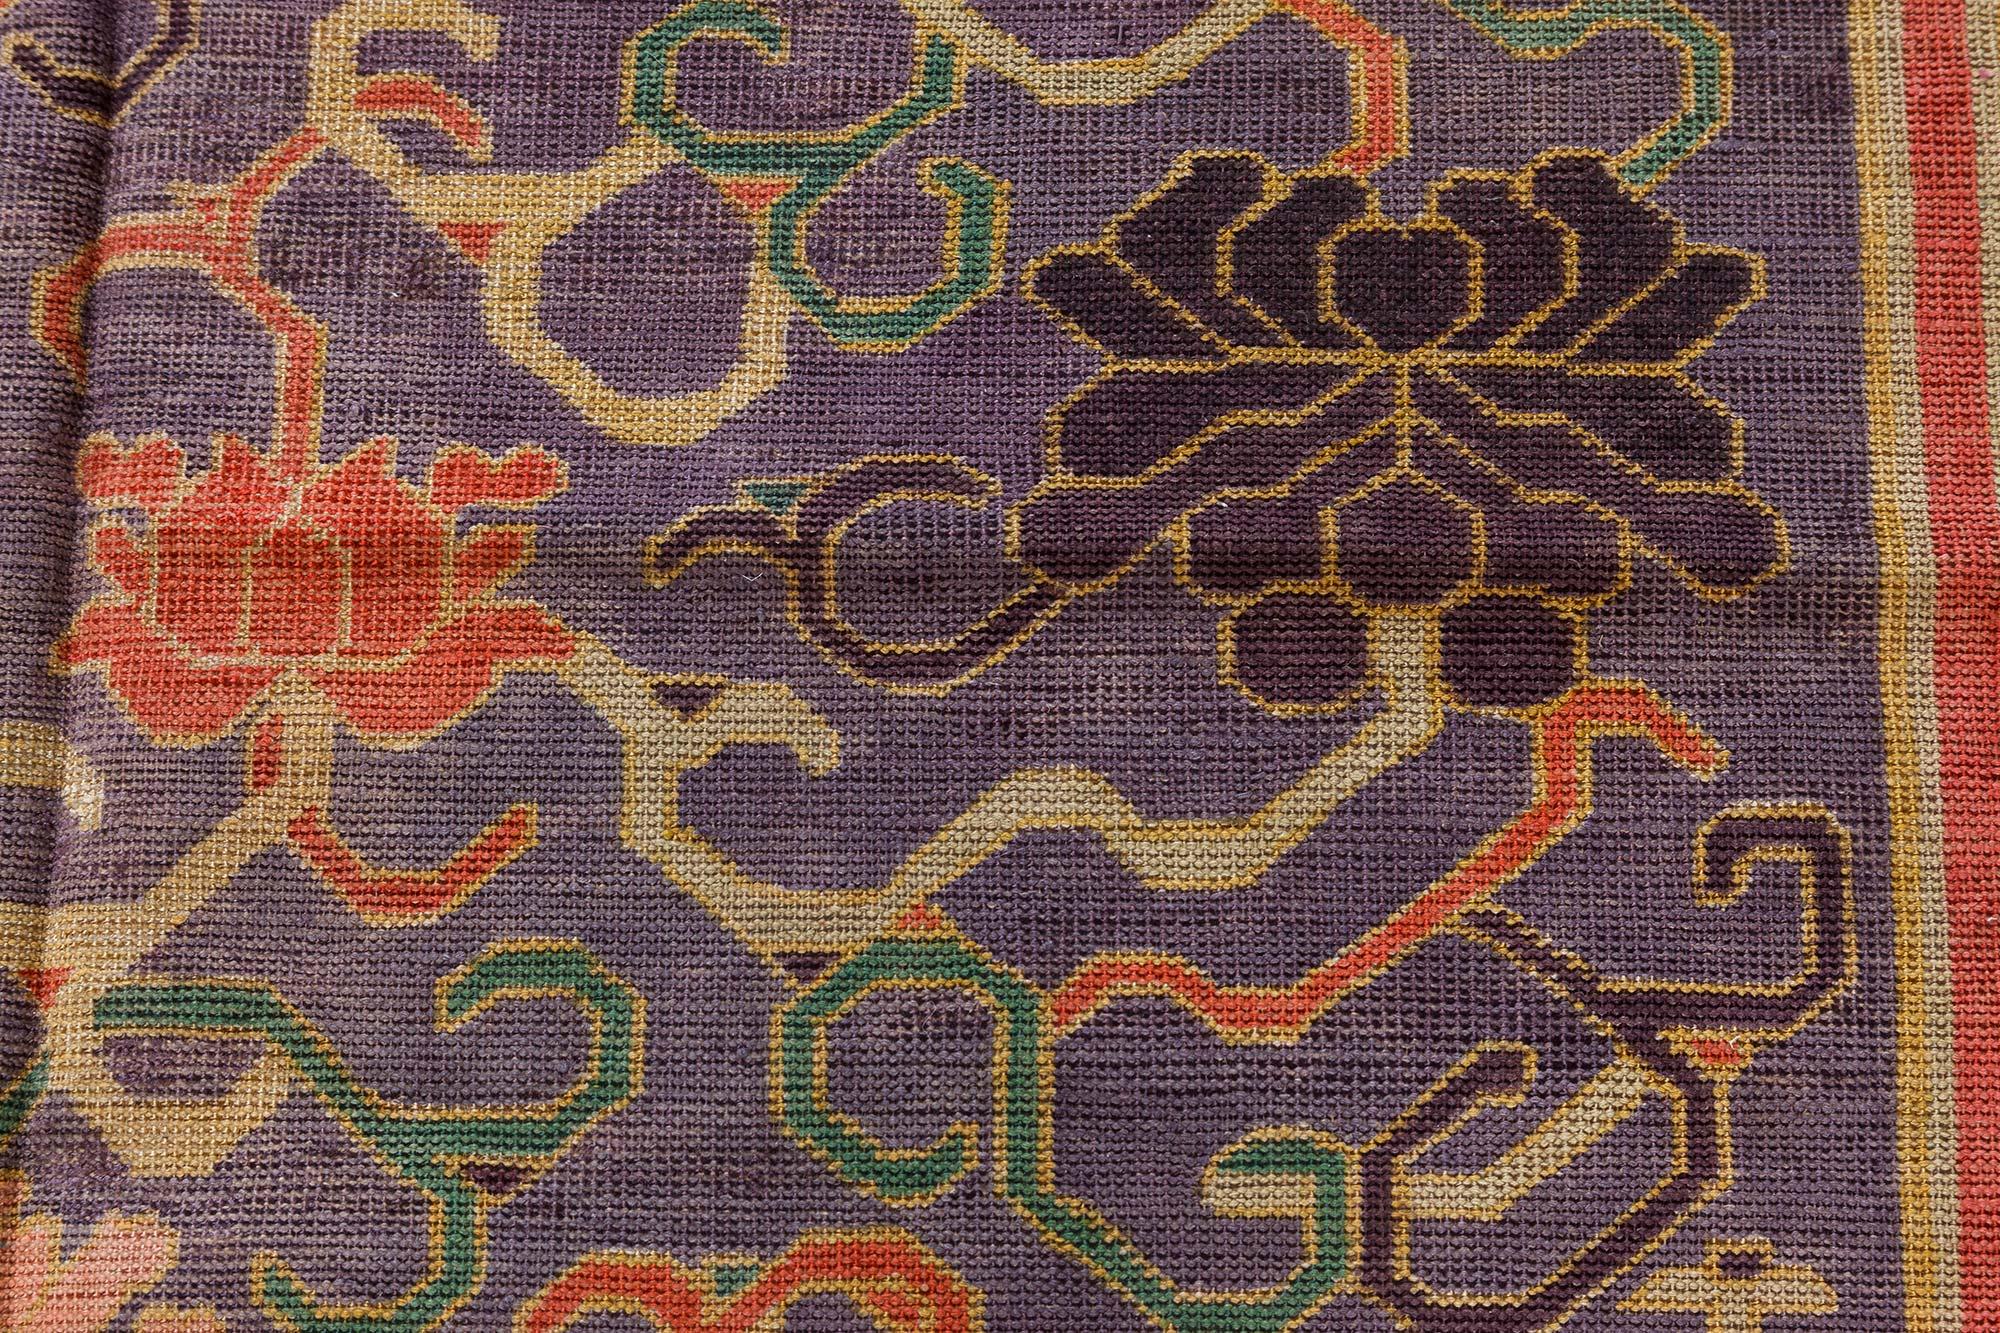 Vintage Chinese bold, botanic silk carpet in purple, red, beige, green
Size: 5'0